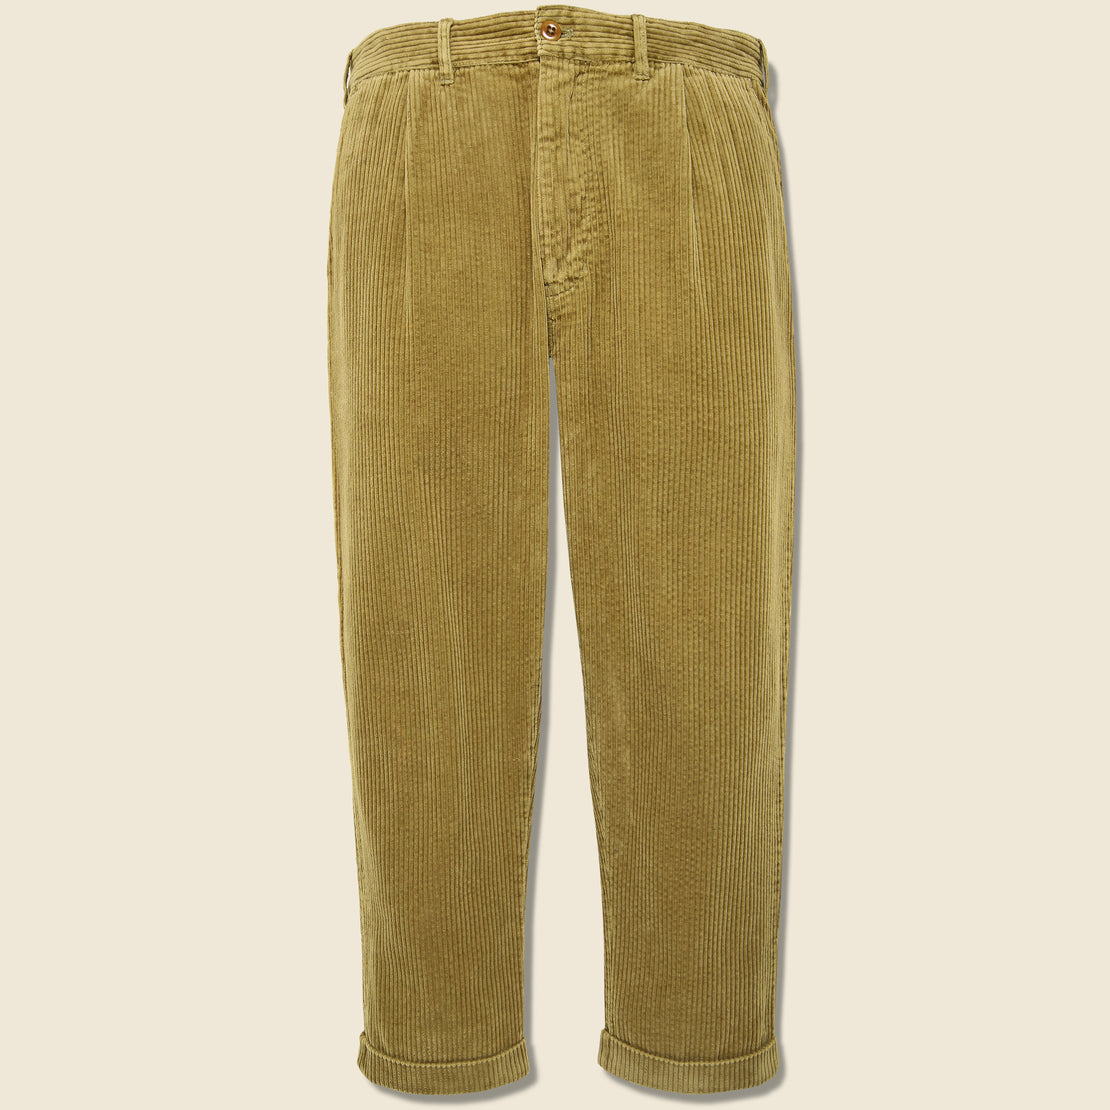 Alex Mill Rugged Corduroy Standard Pleated Pant - Khaki